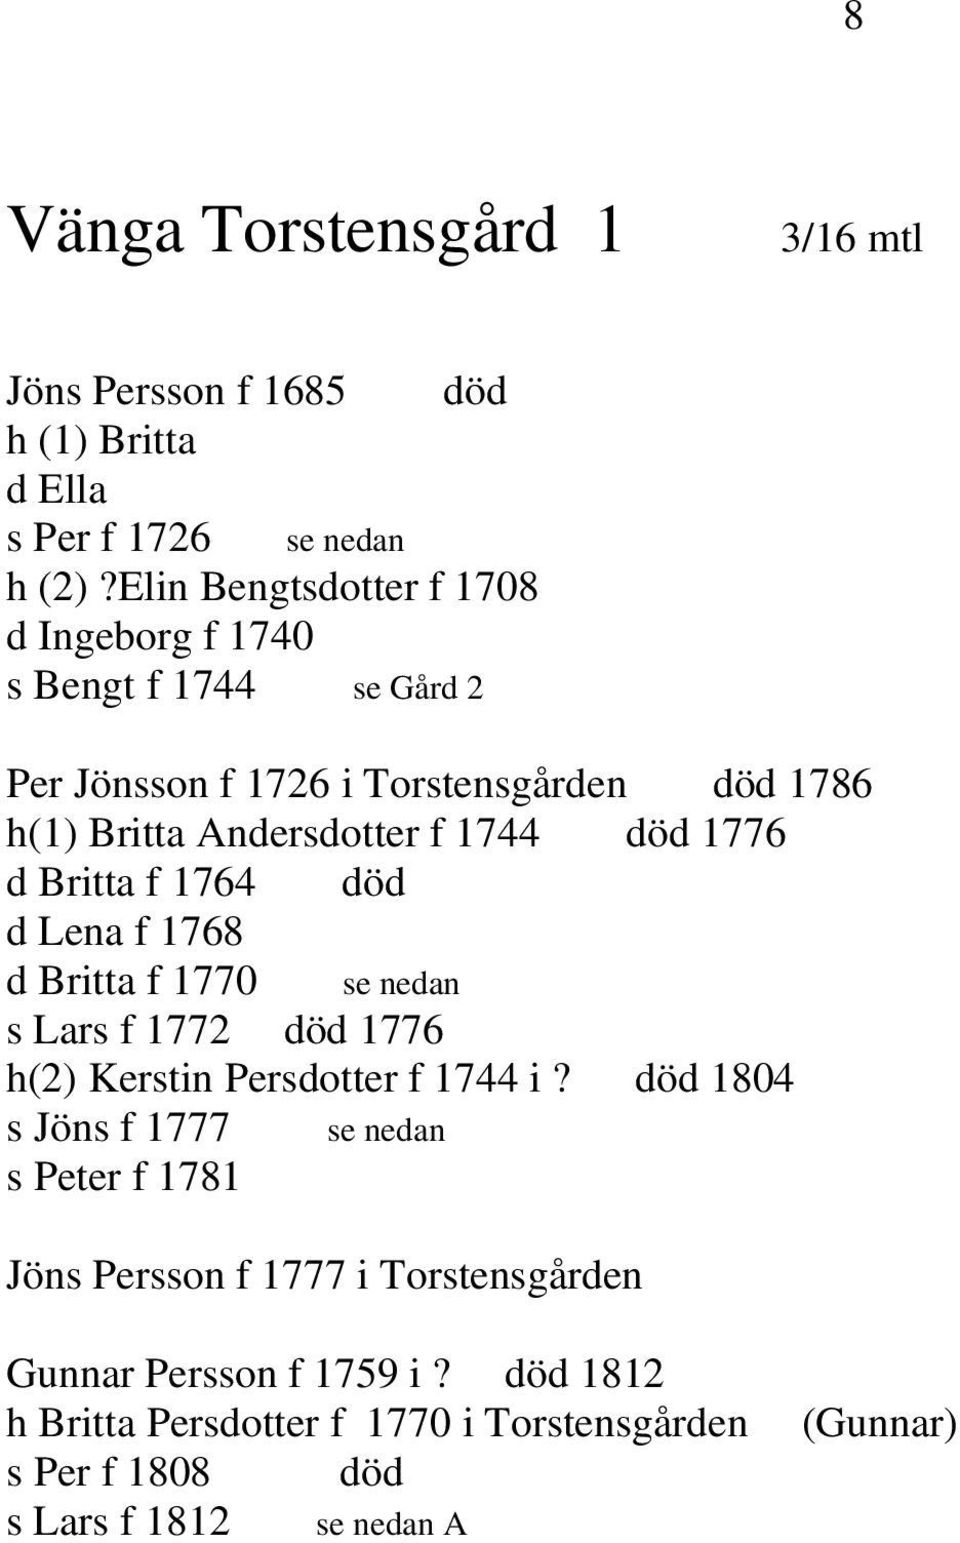 f 1744 död 1776 d Britta f 1764 död d Lena f 1768 d Britta f 1770 s Lars f 1772 död 1776 h(2) Kerstin Persdotter f 1744 i?